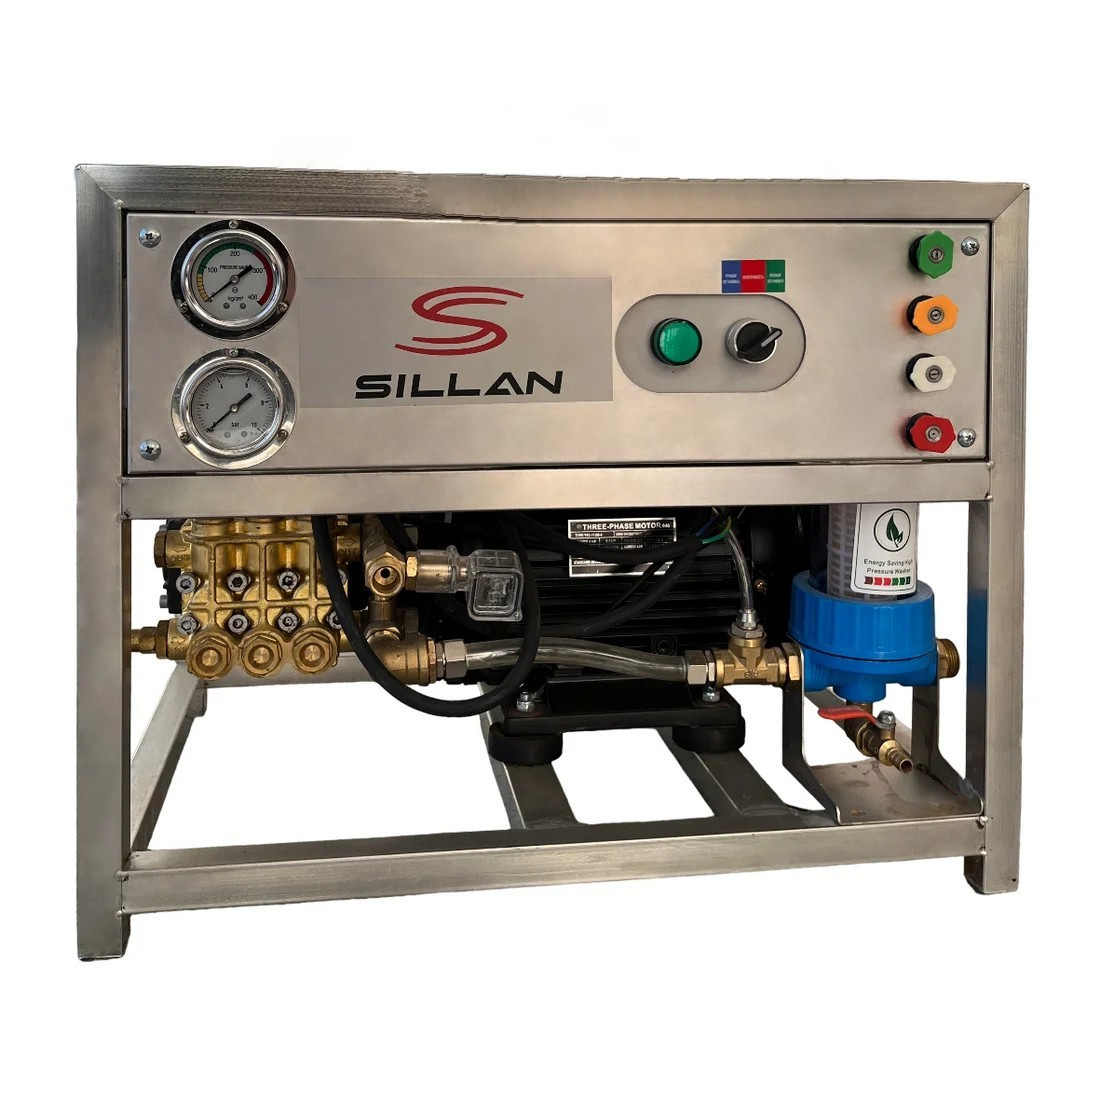 Sillan-BN 801 Аппарат высокого давления стационарный, фото 1